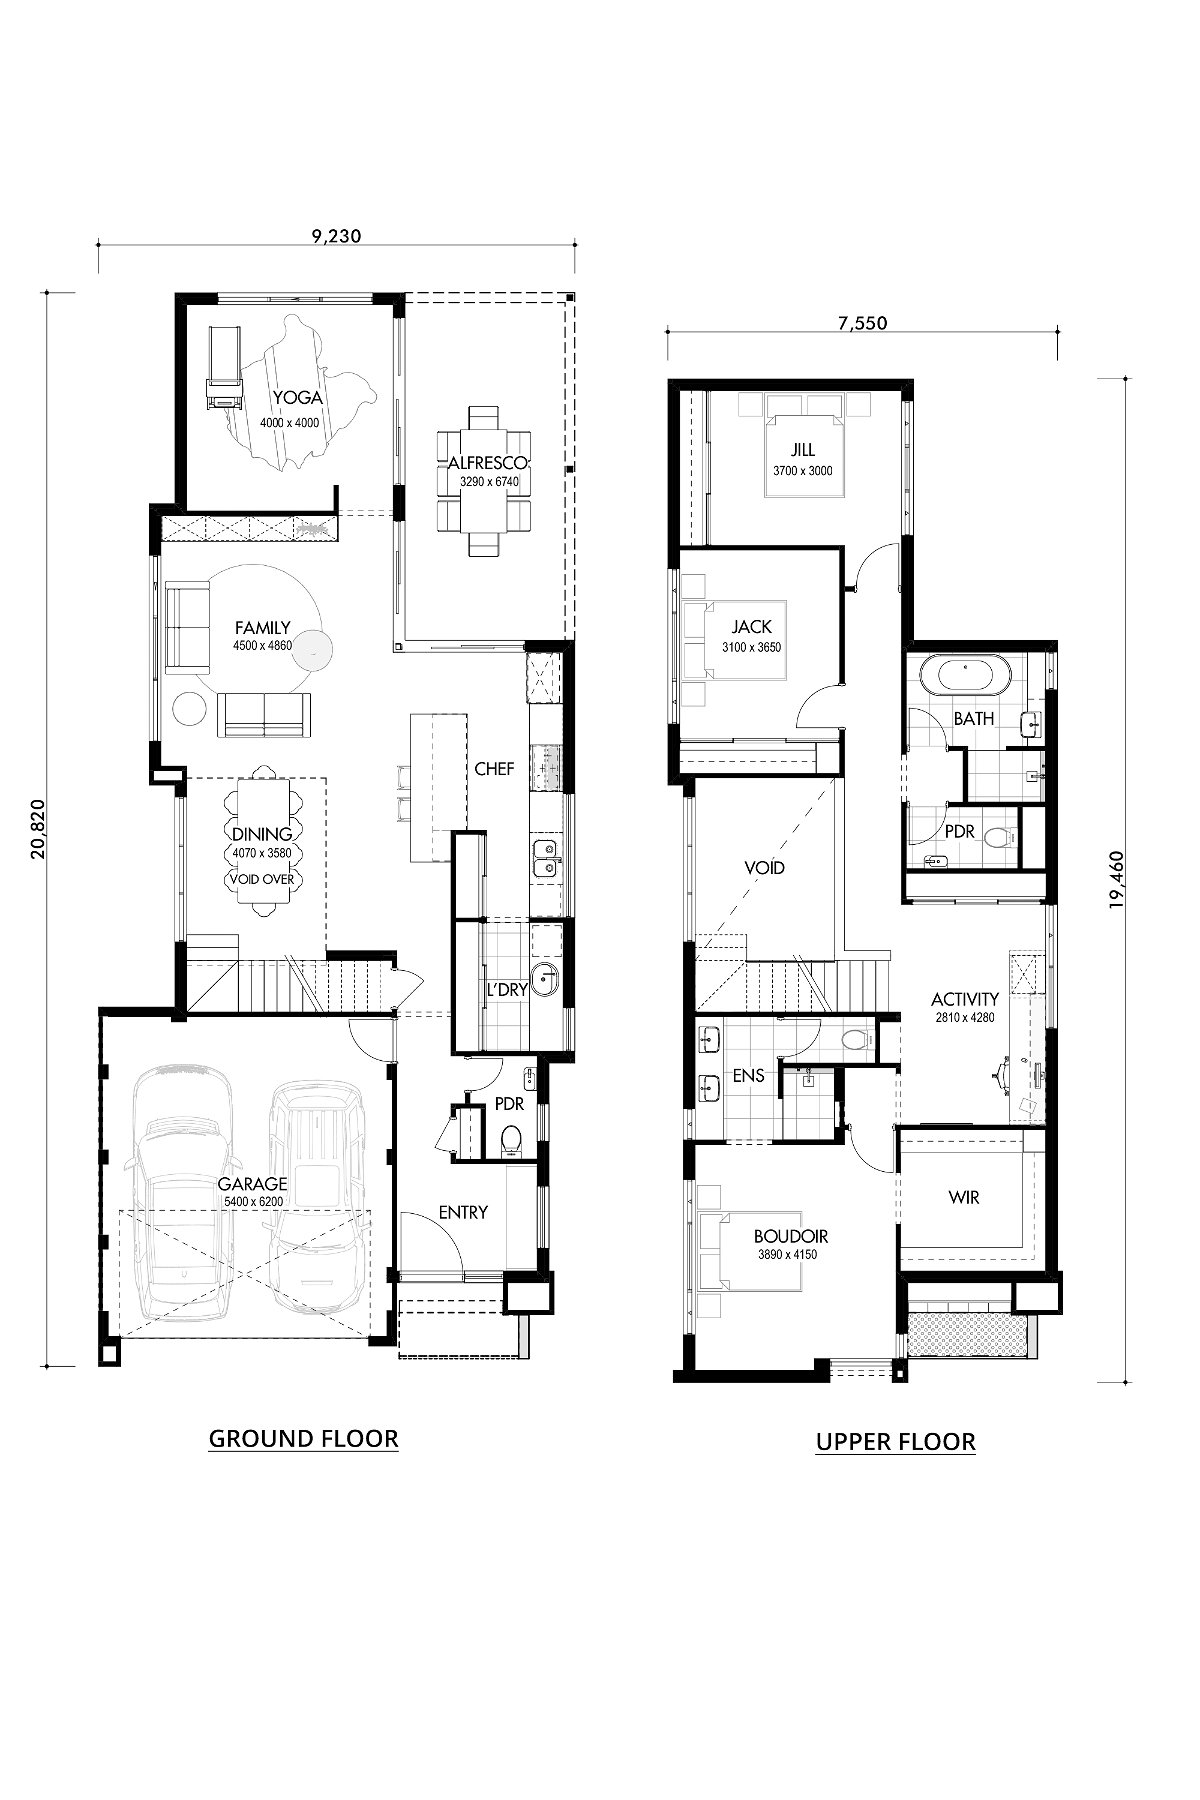 Residential Attitudes - Zen Den - Floorplan - Zen Den Floorplan Website